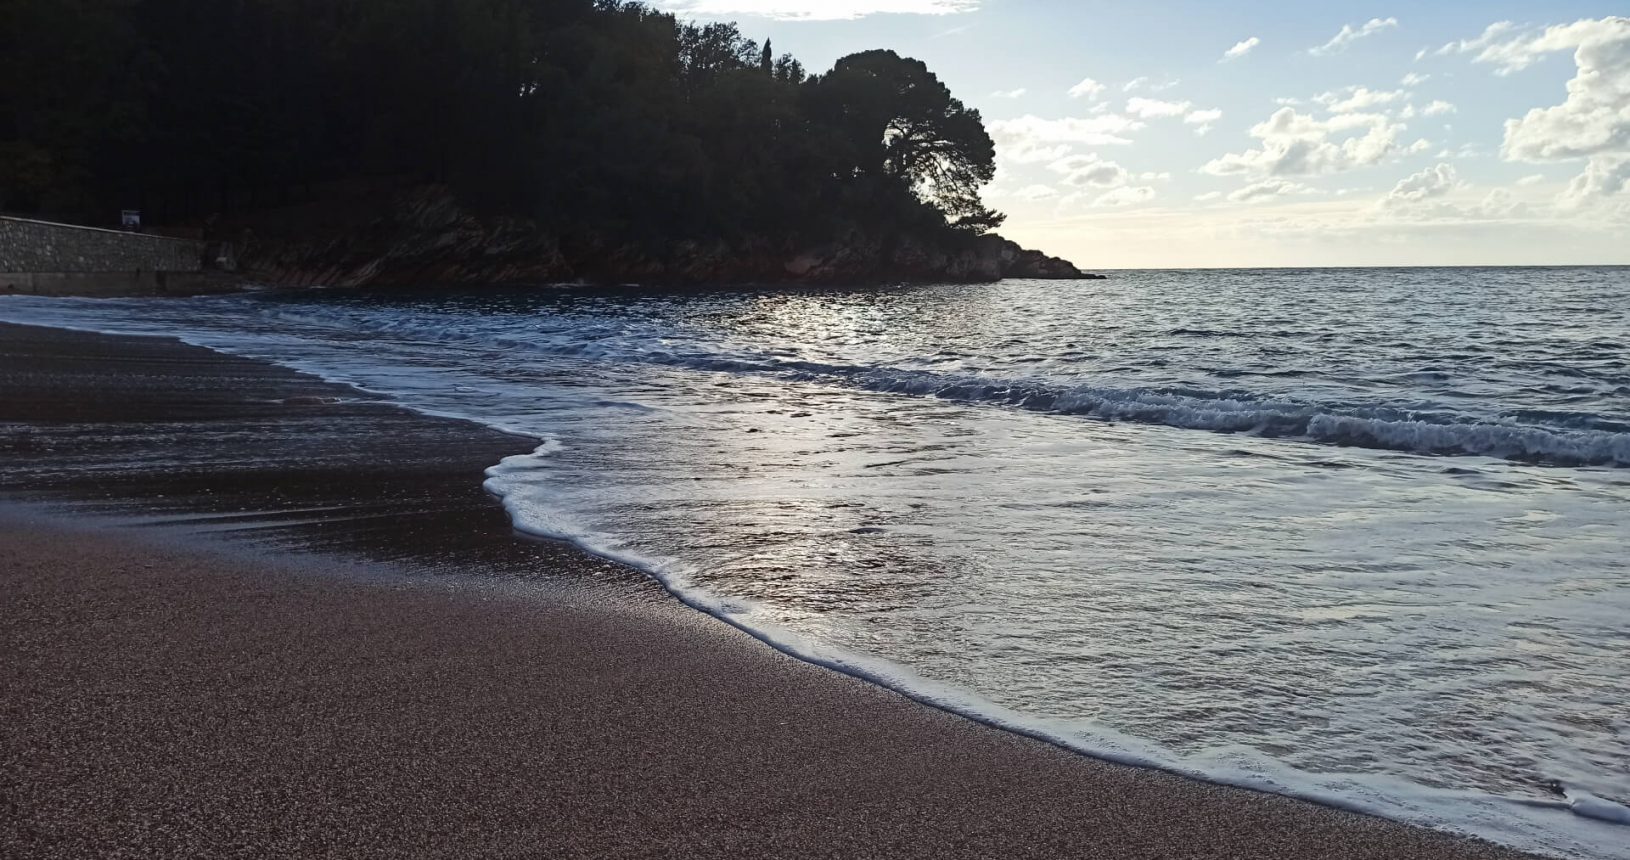 Peaceful Milocer beach. Red pebble